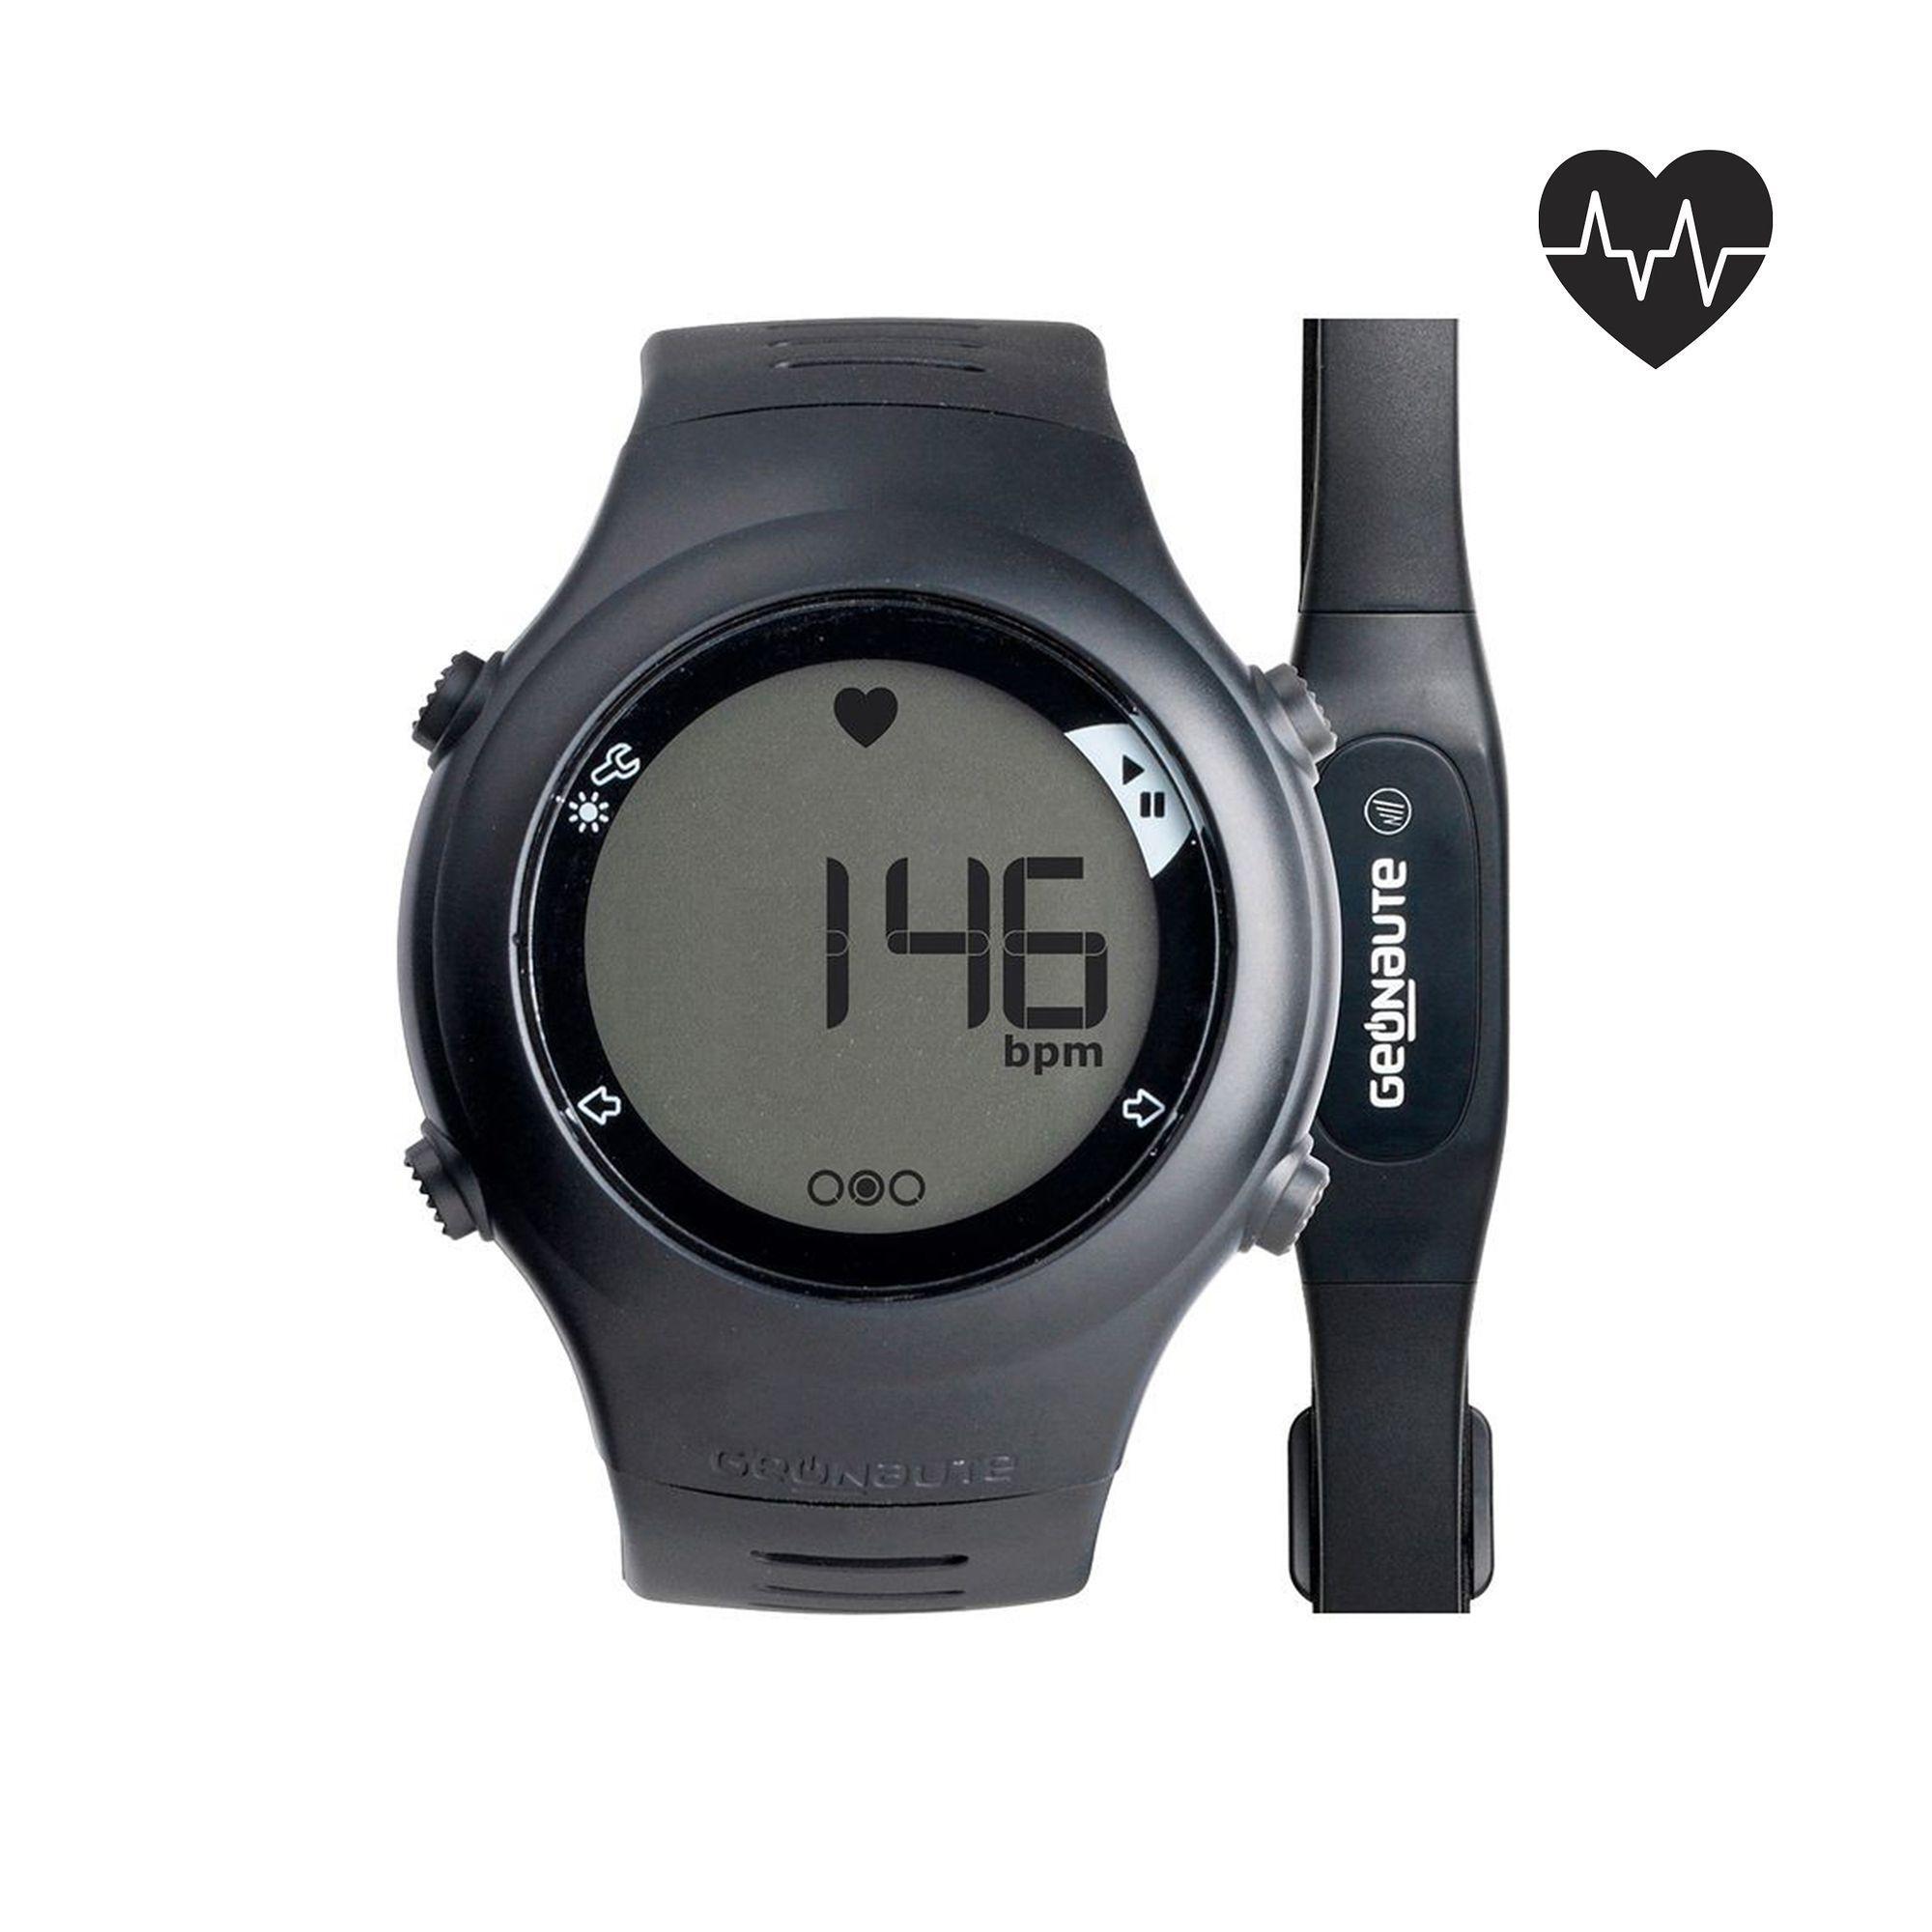 ONRHYTHM 110 runner's heart rate monitor watch black 5/5